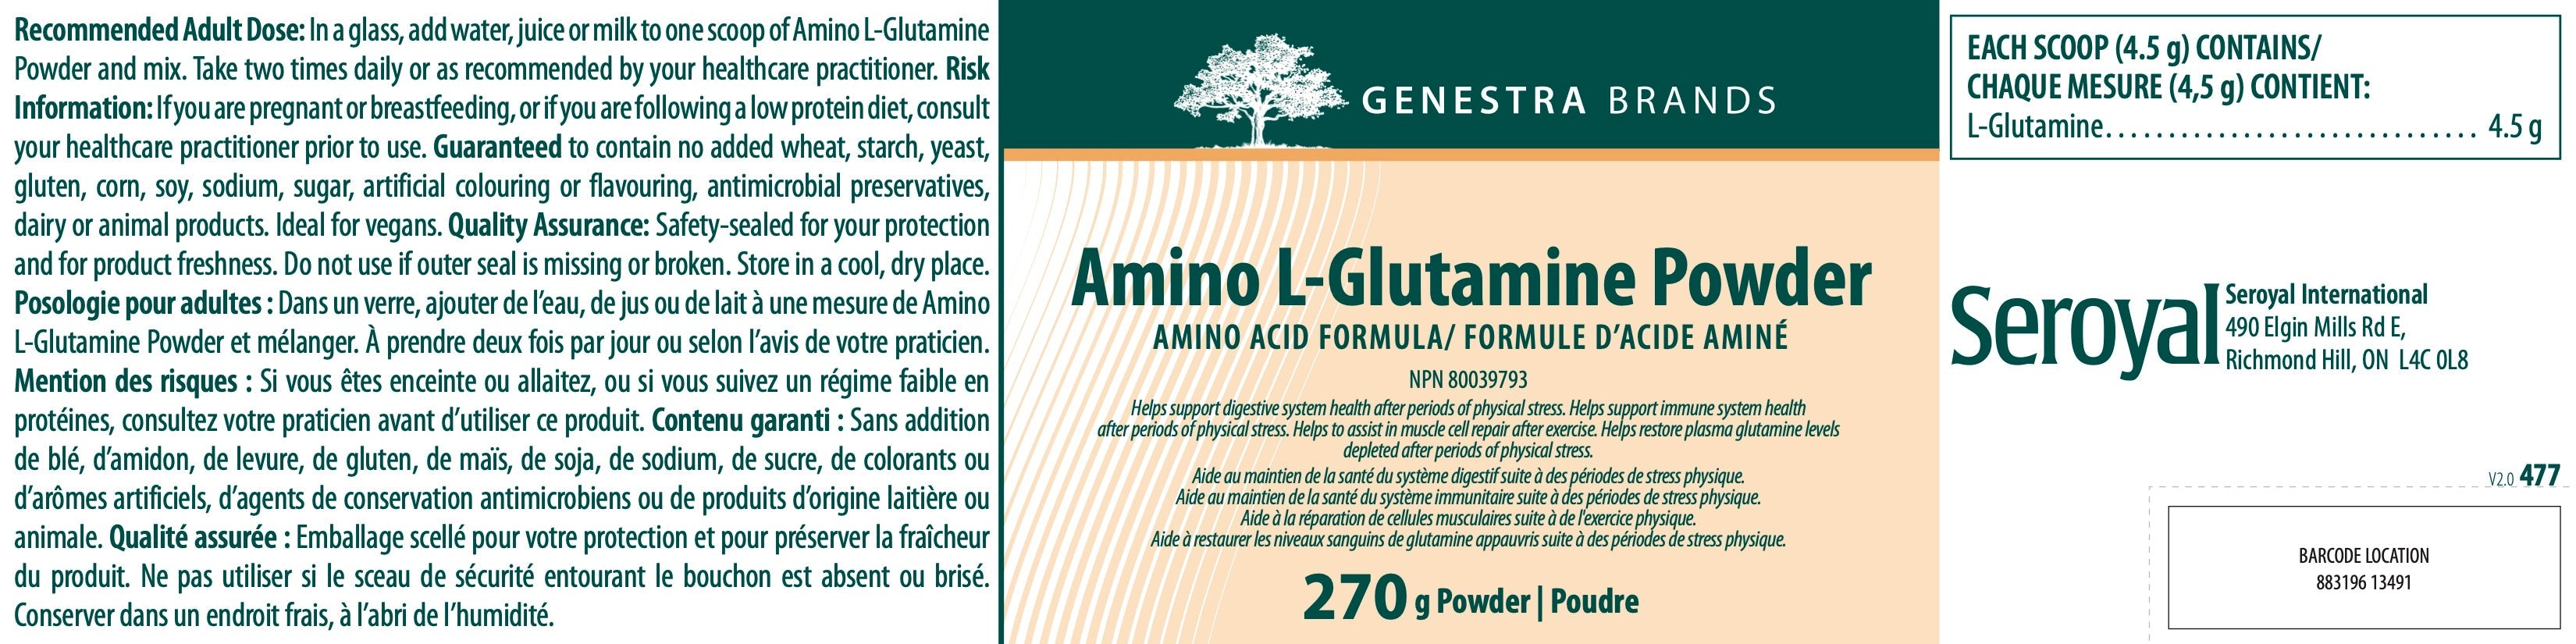 SOLDE - Amino L-Glutamine Powder